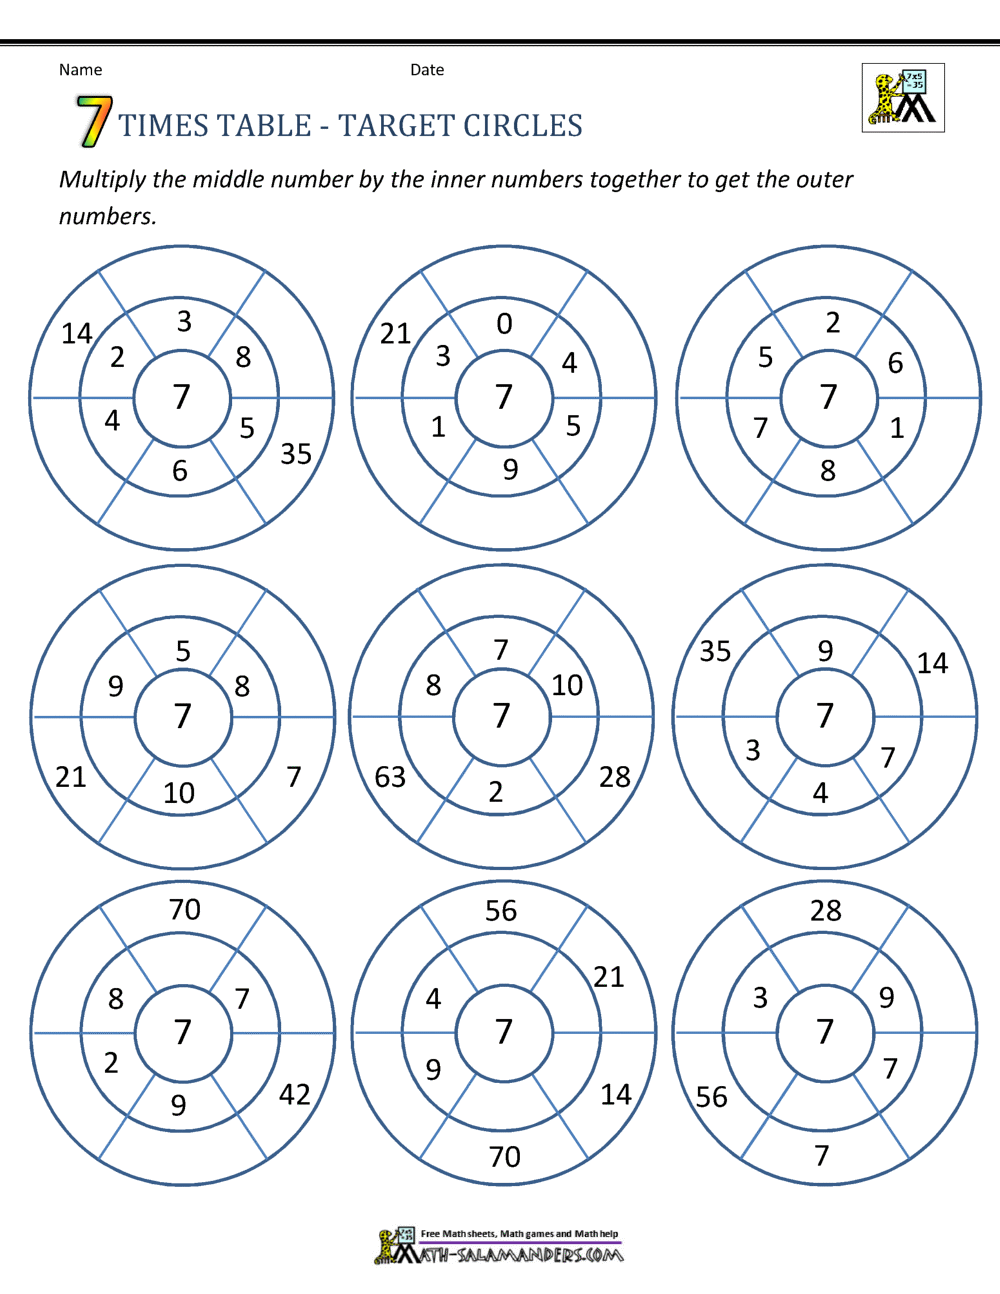 7-multiplication-chart-ferfocus